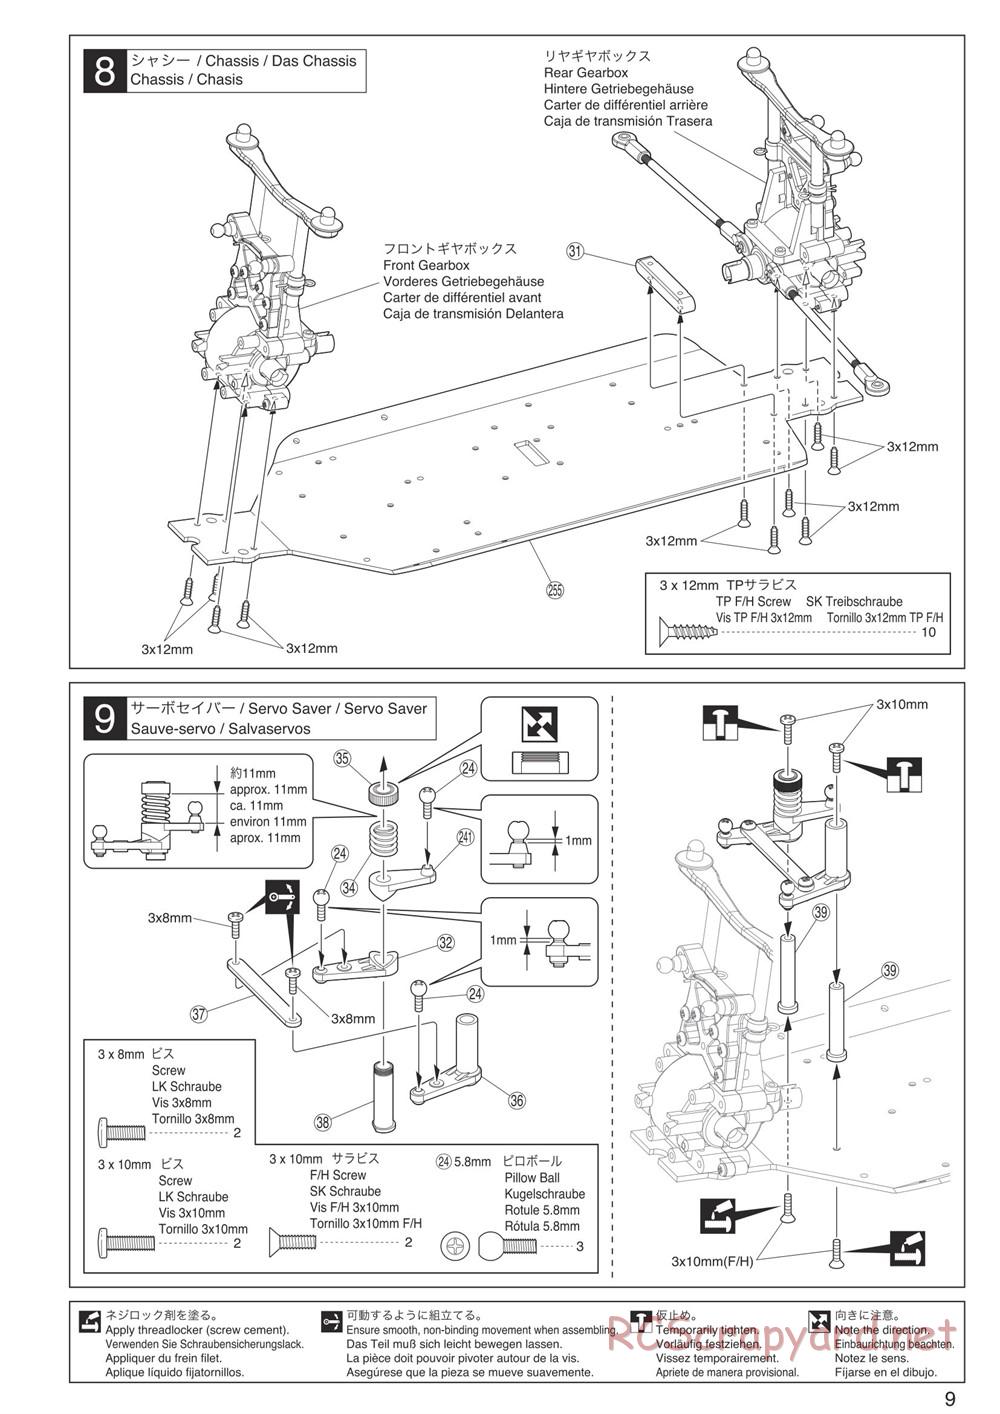 Kyosho - DMT-VE - Manual - Page 9